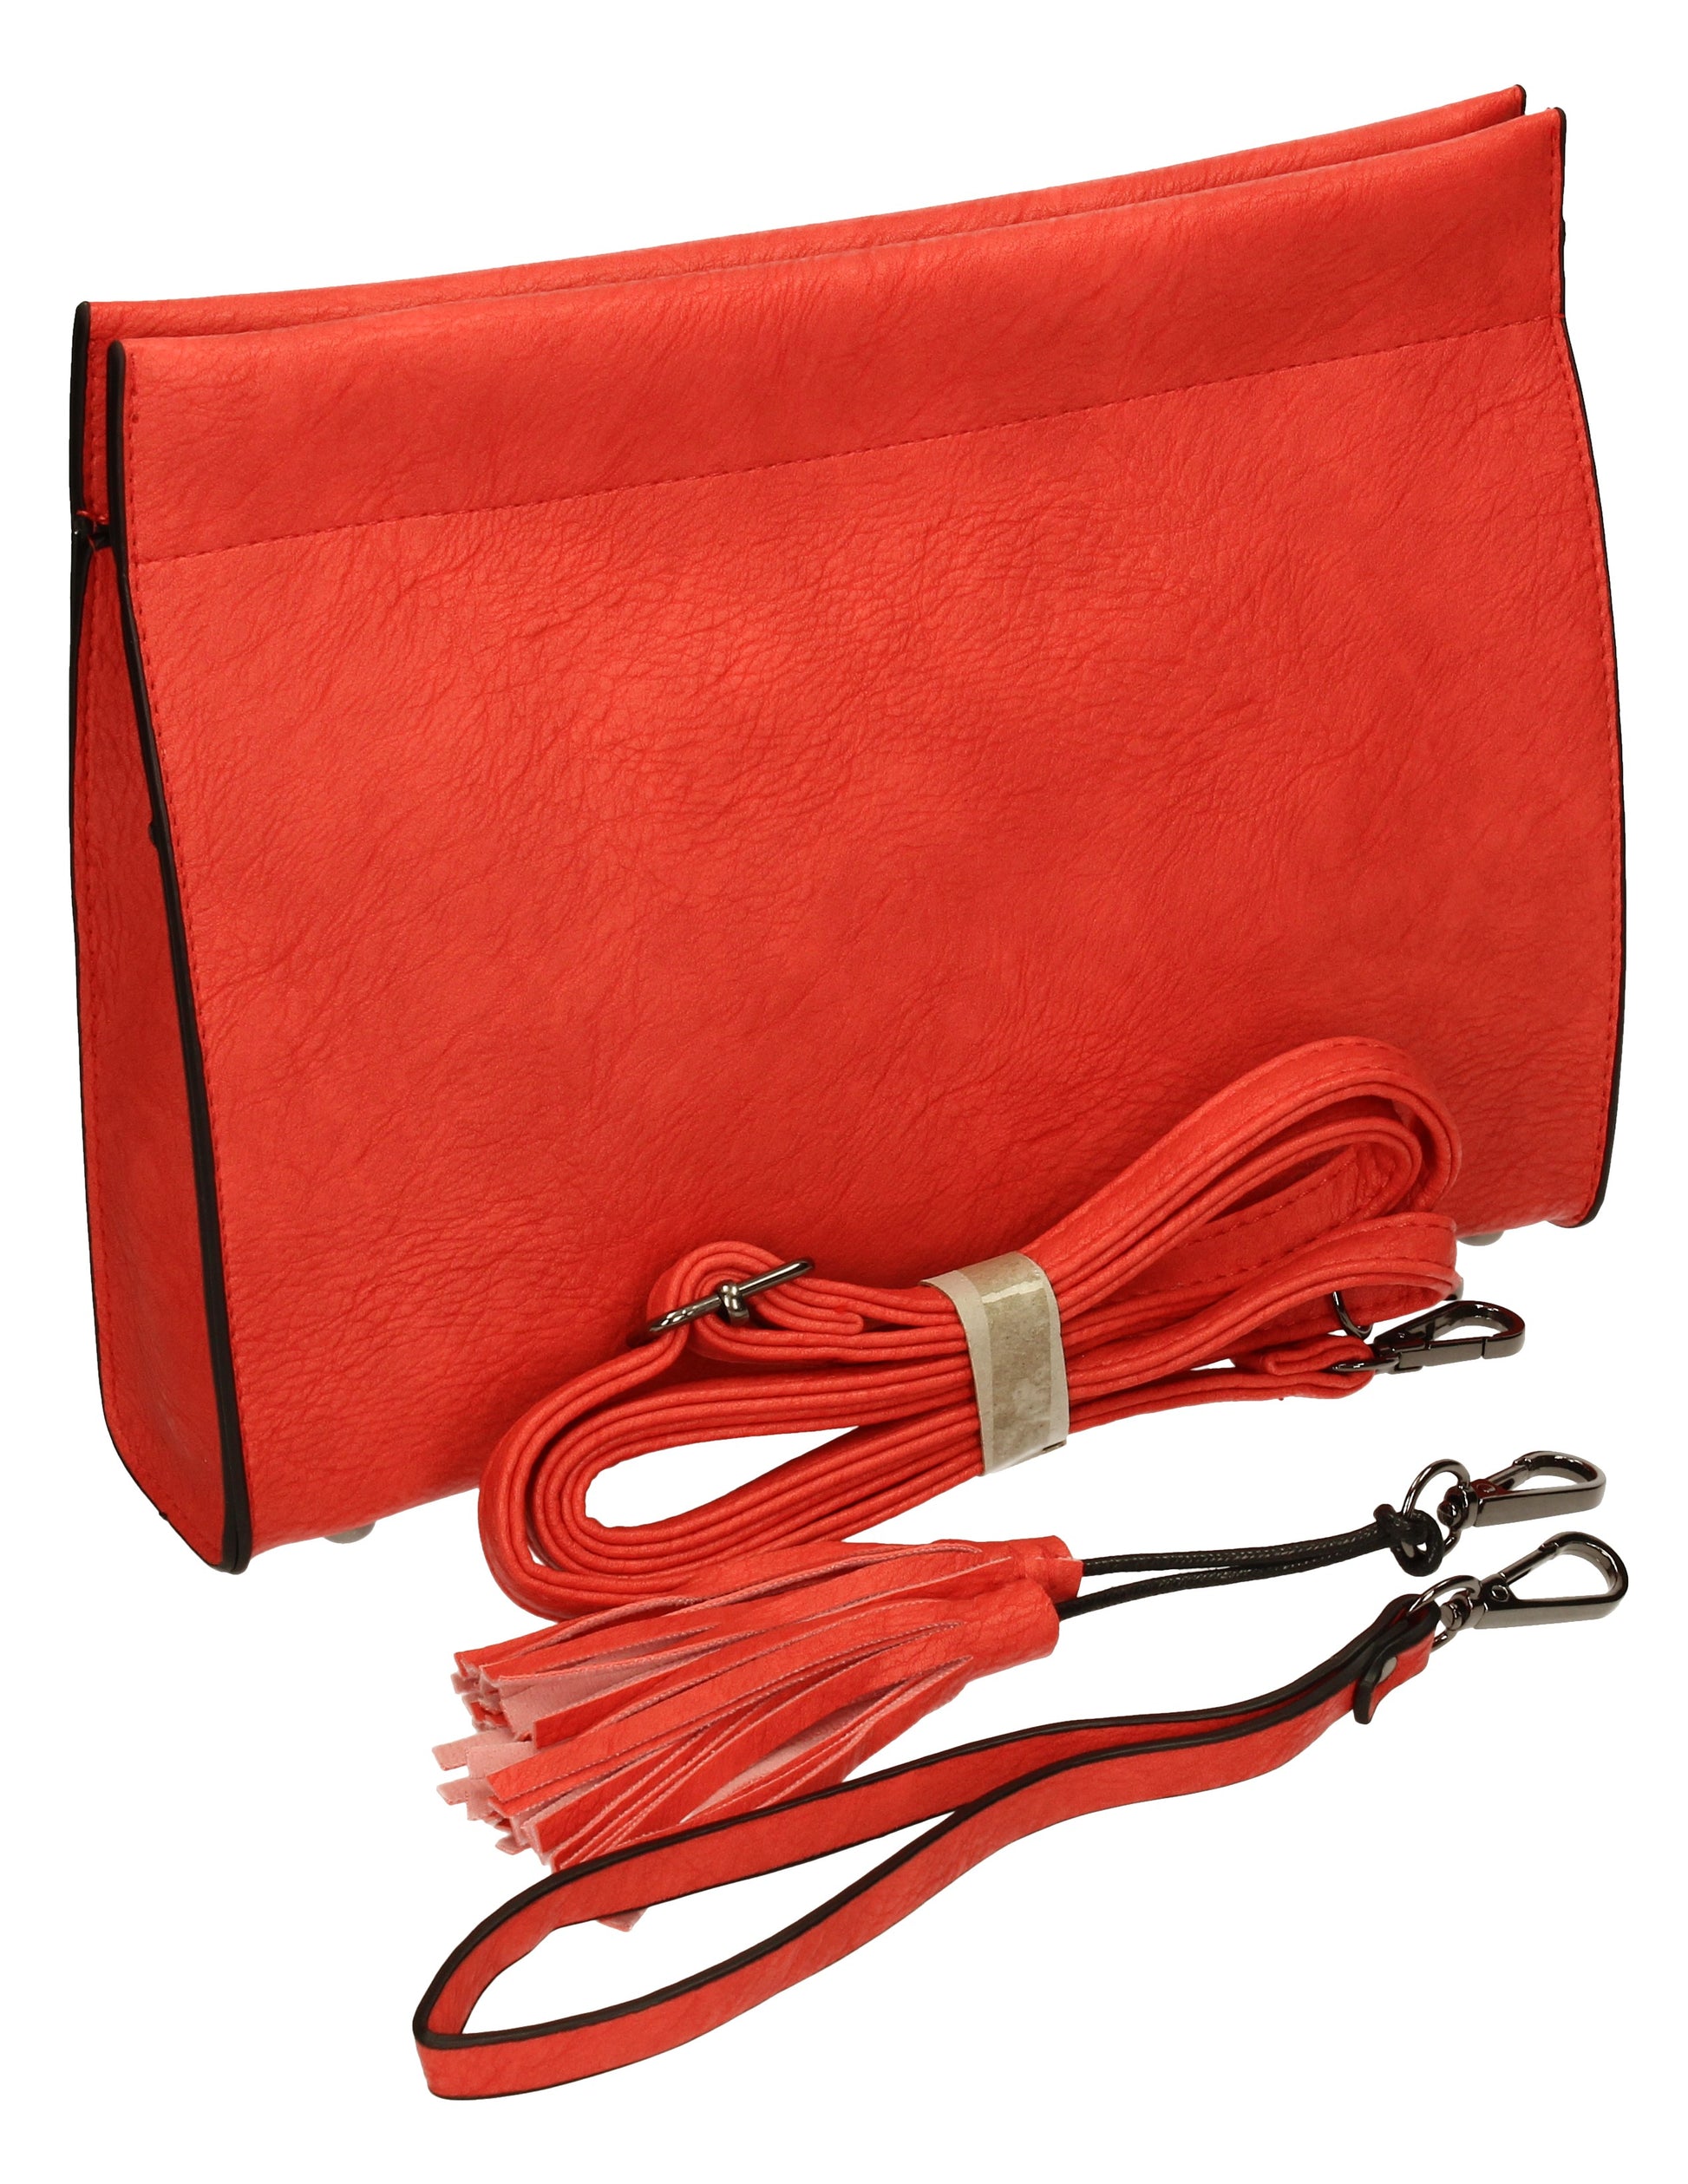 SWANKYSWANS Dina Tassel Clutch Bag Scarlet Cute Cheap Clutch Bag For Weddings School and Work